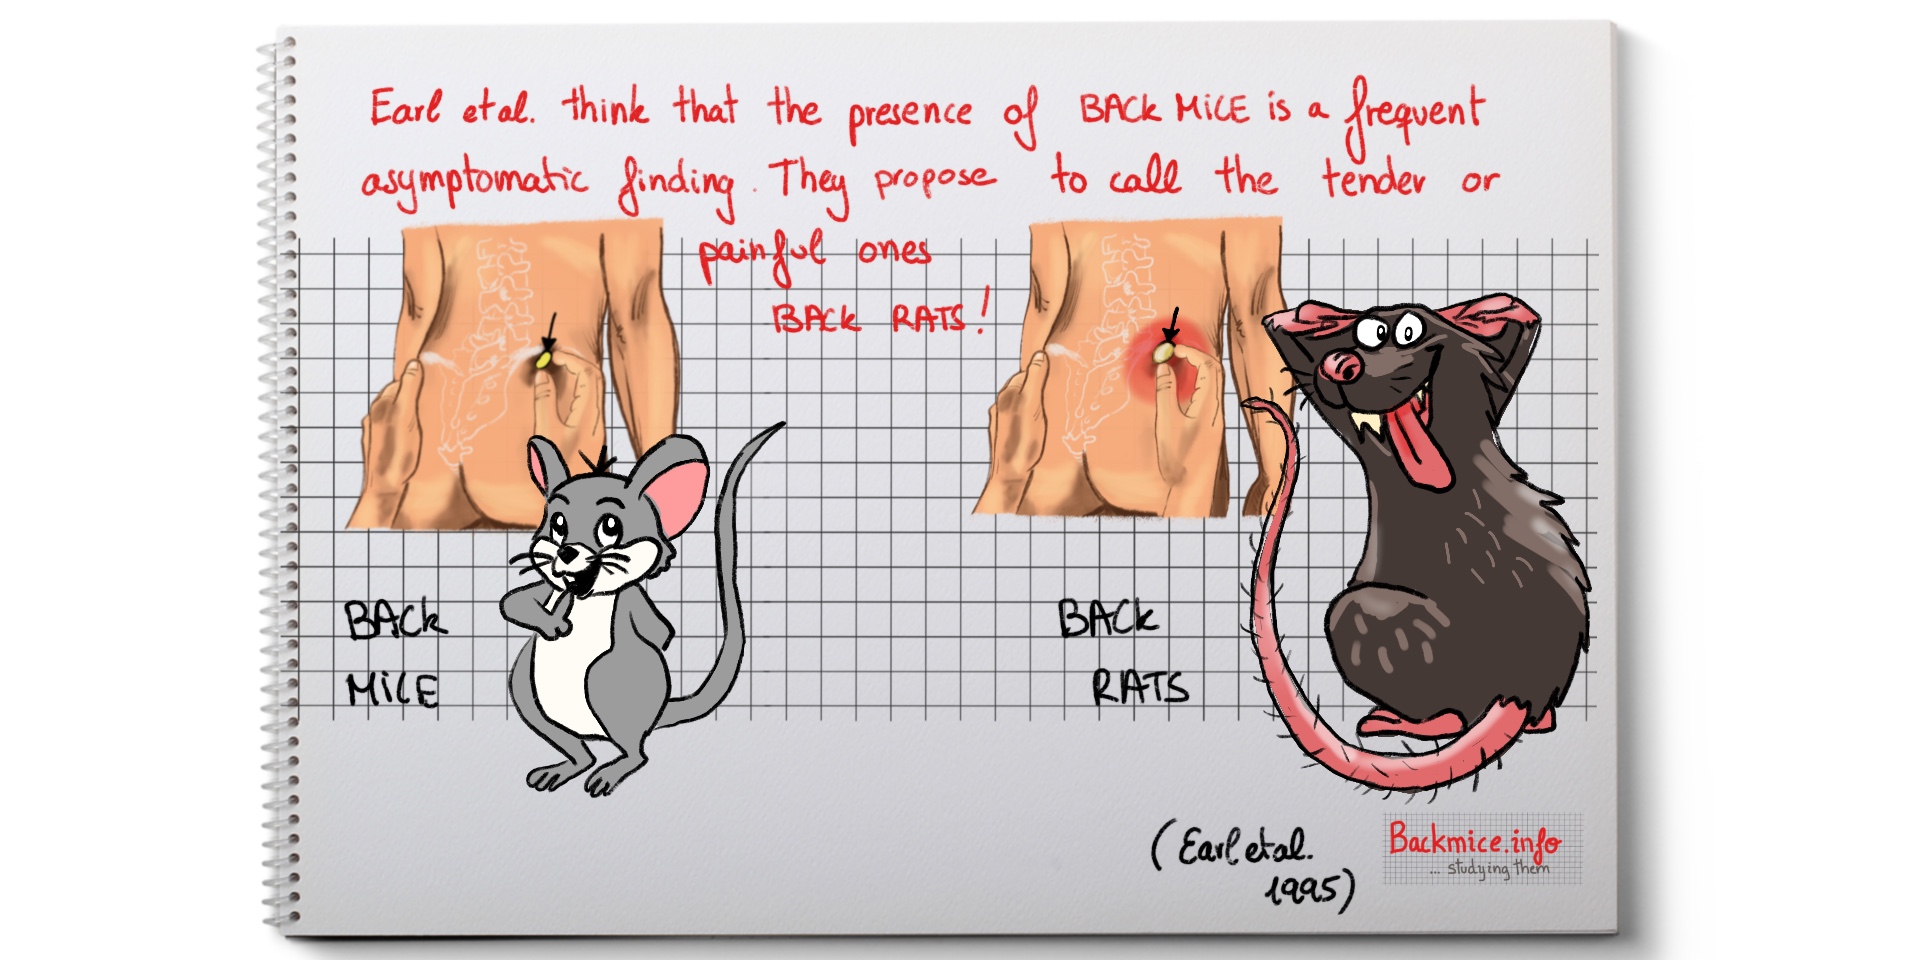 Back mice vs back ratsratsratsrats